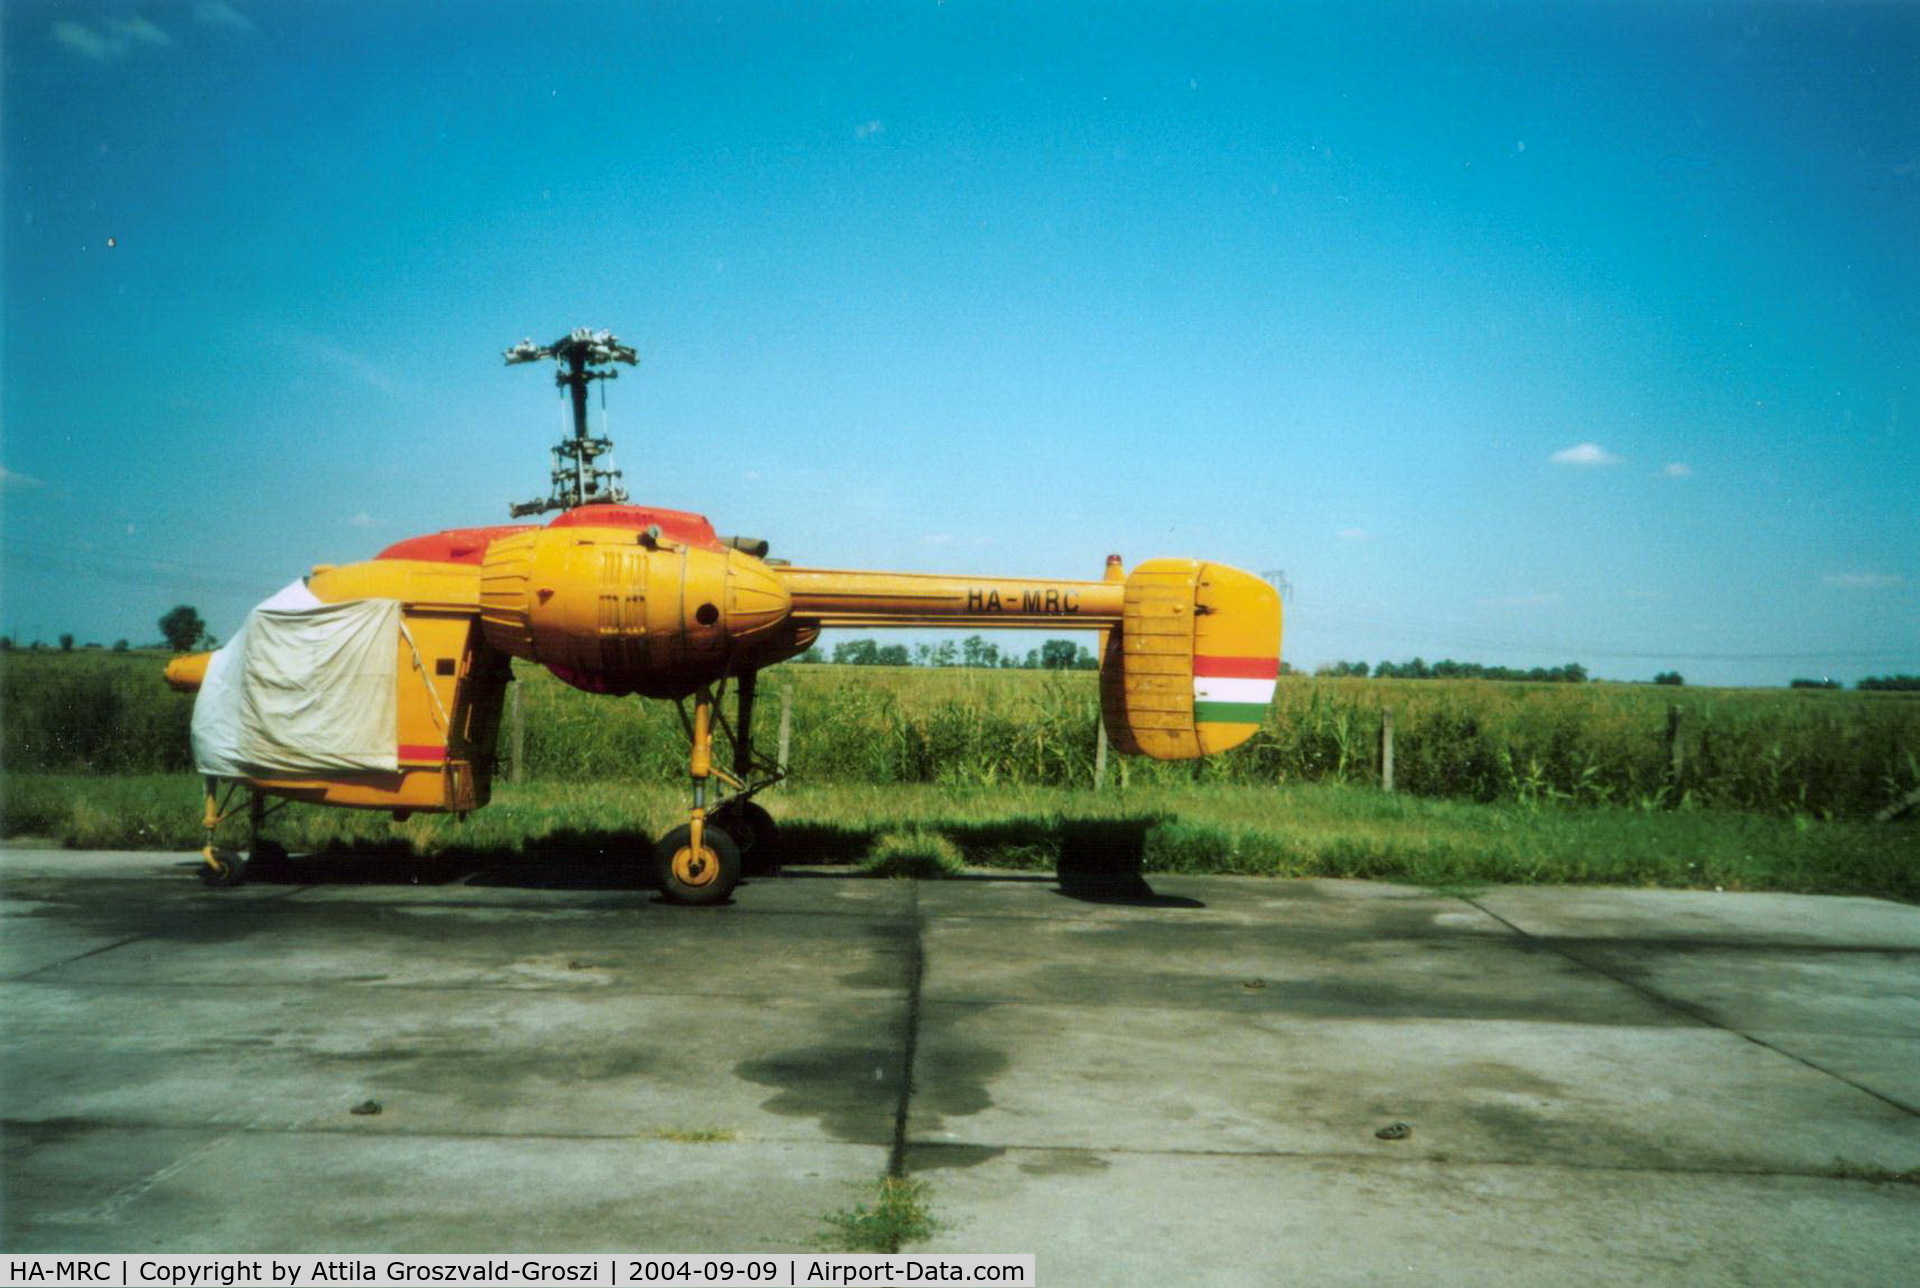 HA-MRC, 1978 Kamov Ka-26 Hoodlum C/N 7806409, Cegléd-Huszárdülö agricultural take-off field